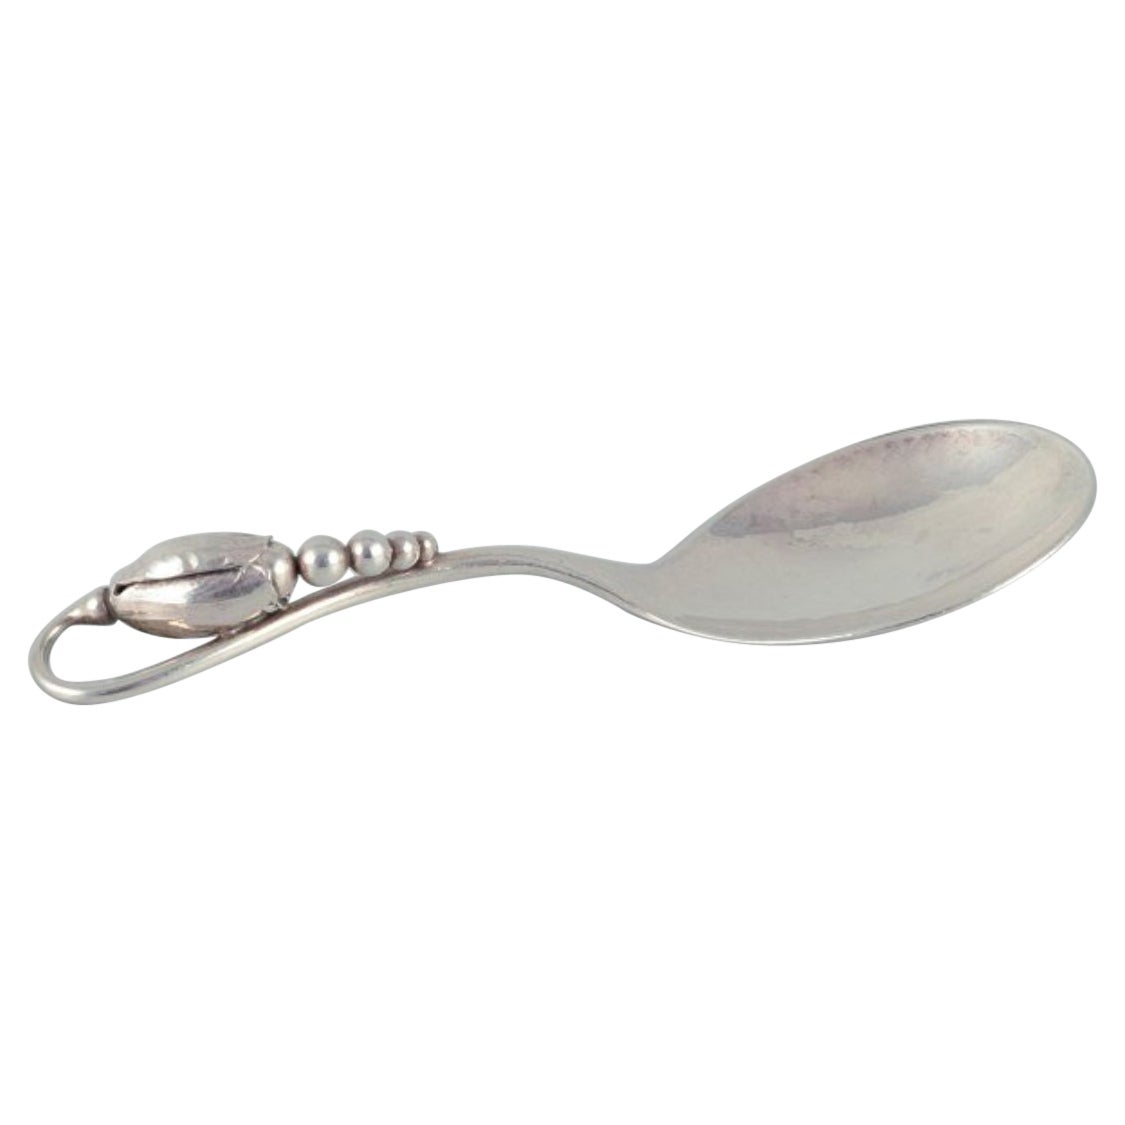 Georg Jensen, Denmark. "Blossom" sugar spoon in sterling silver. For Sale